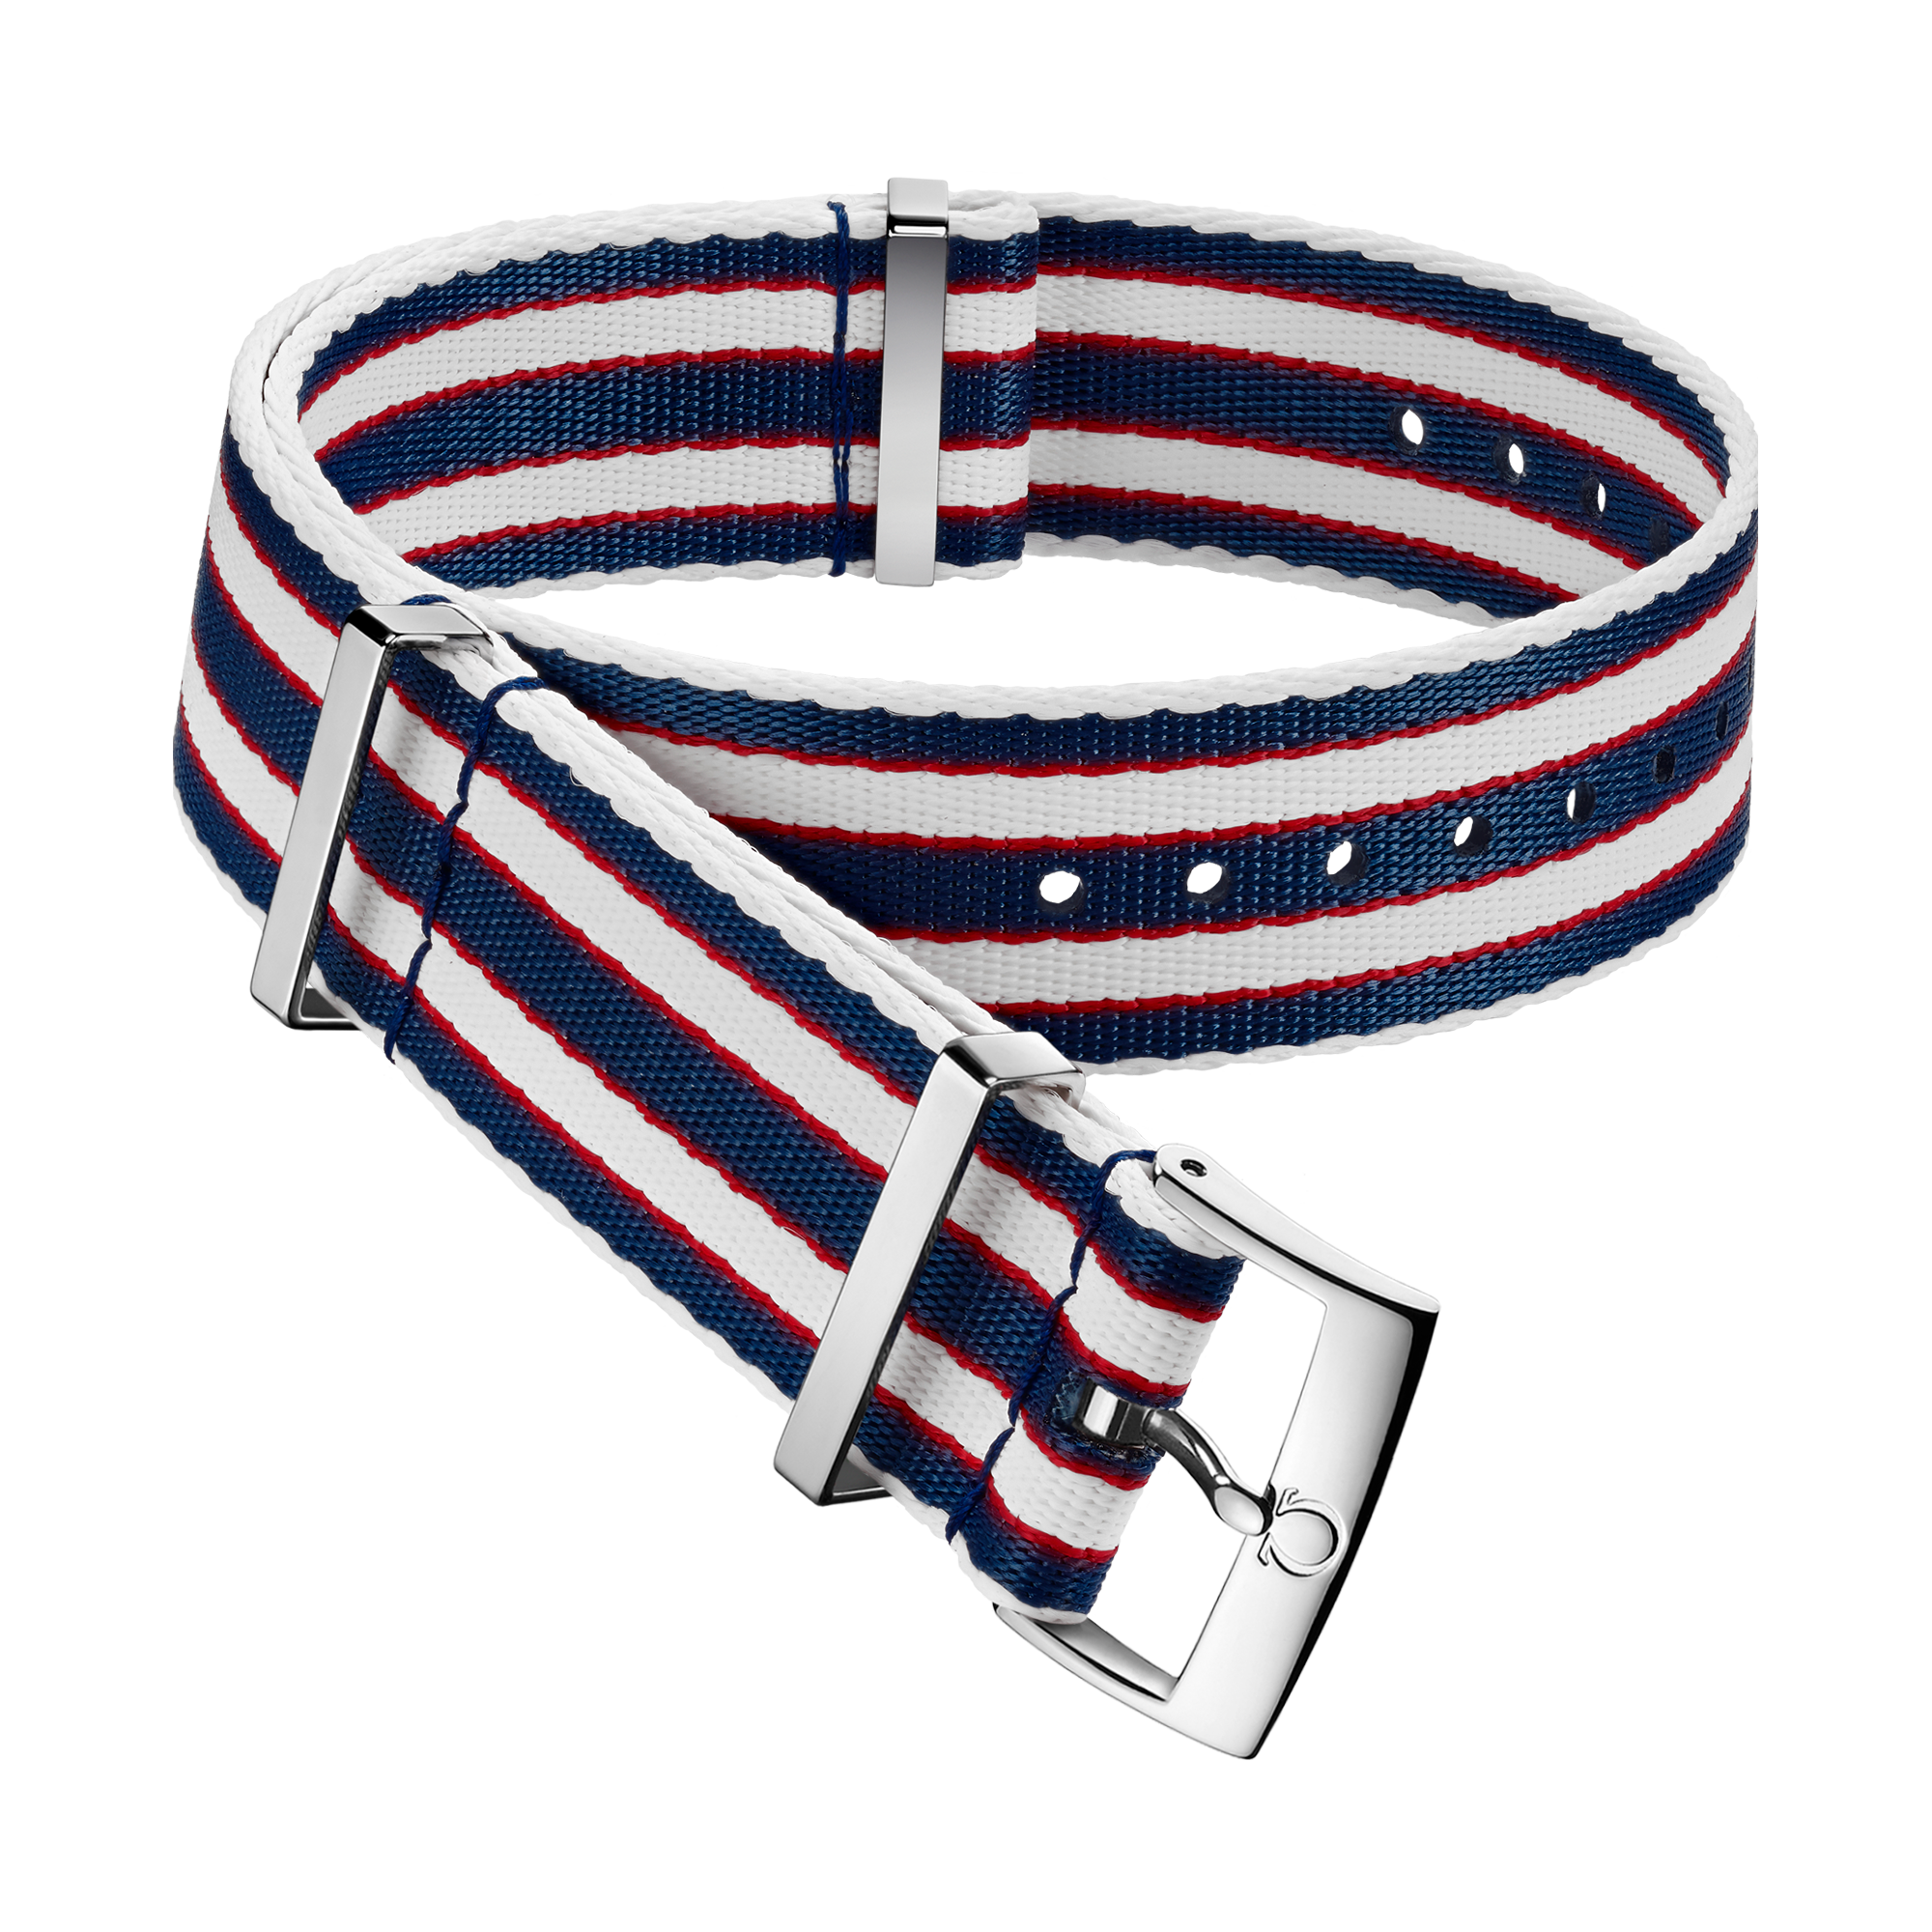 NATO strap - Polyamide striped blue, red and white strap - 031CWZ010694w